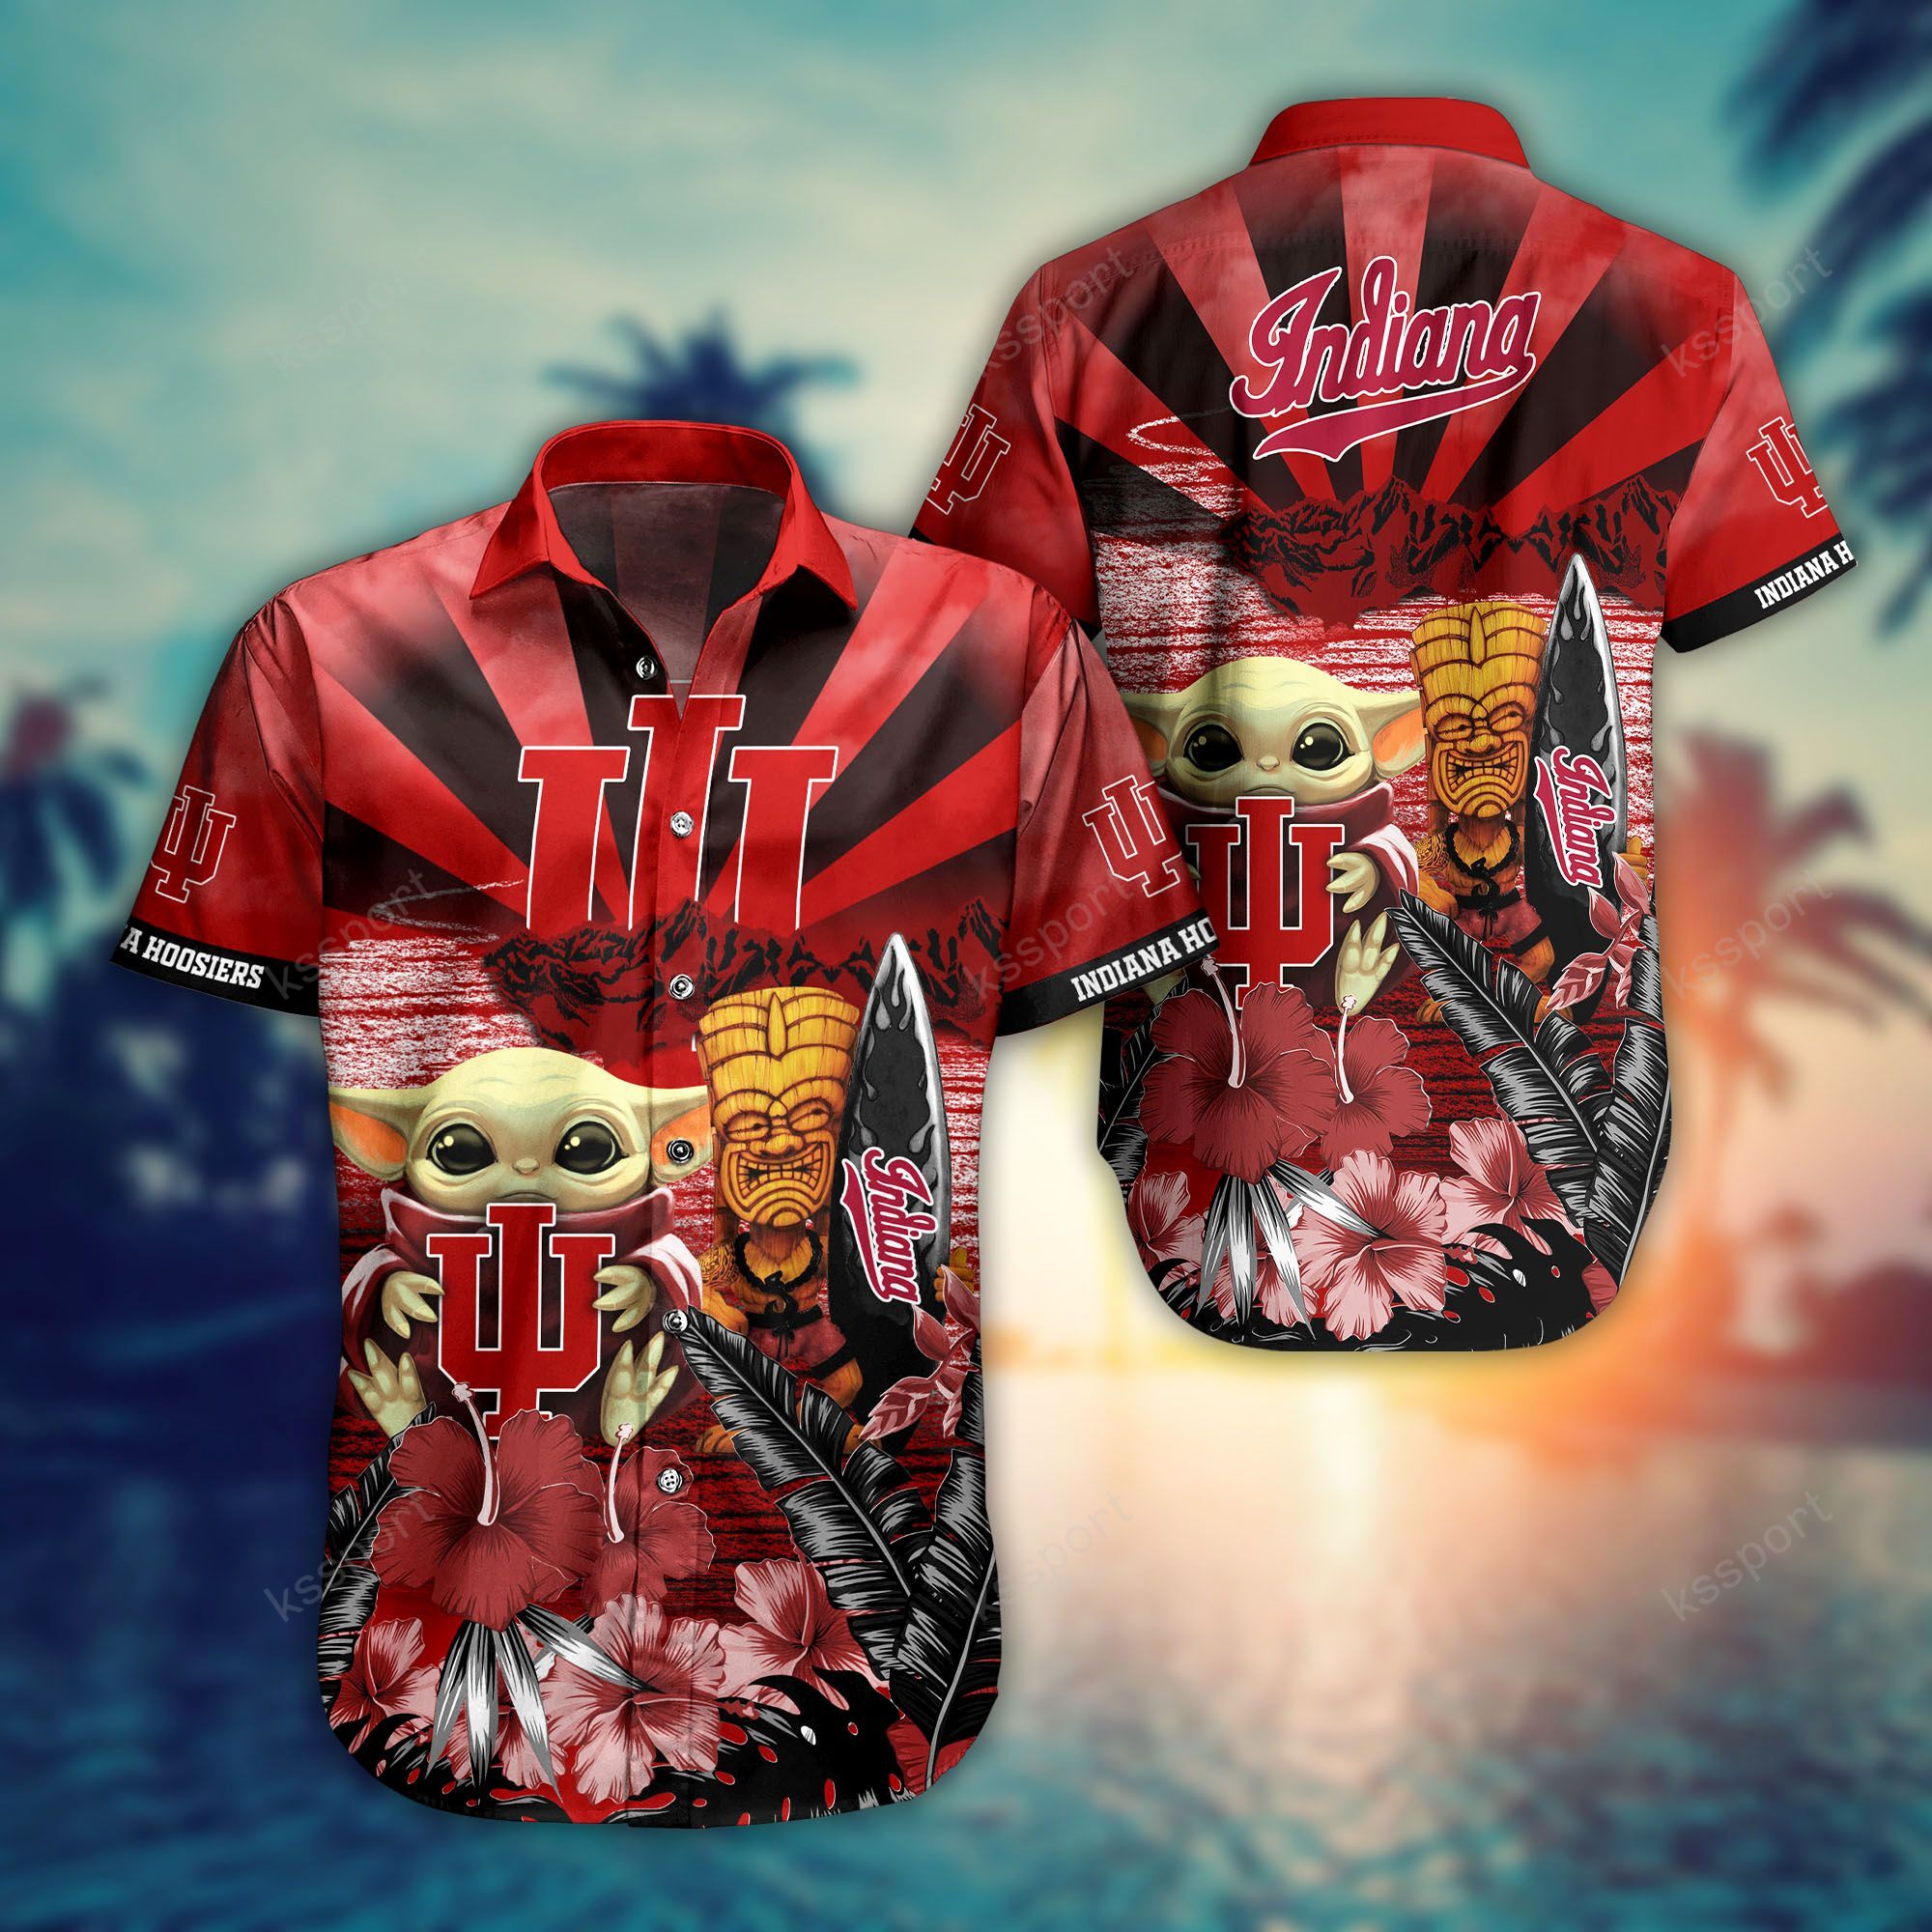 Order Hawaiian shirts to wear on your vacation 65